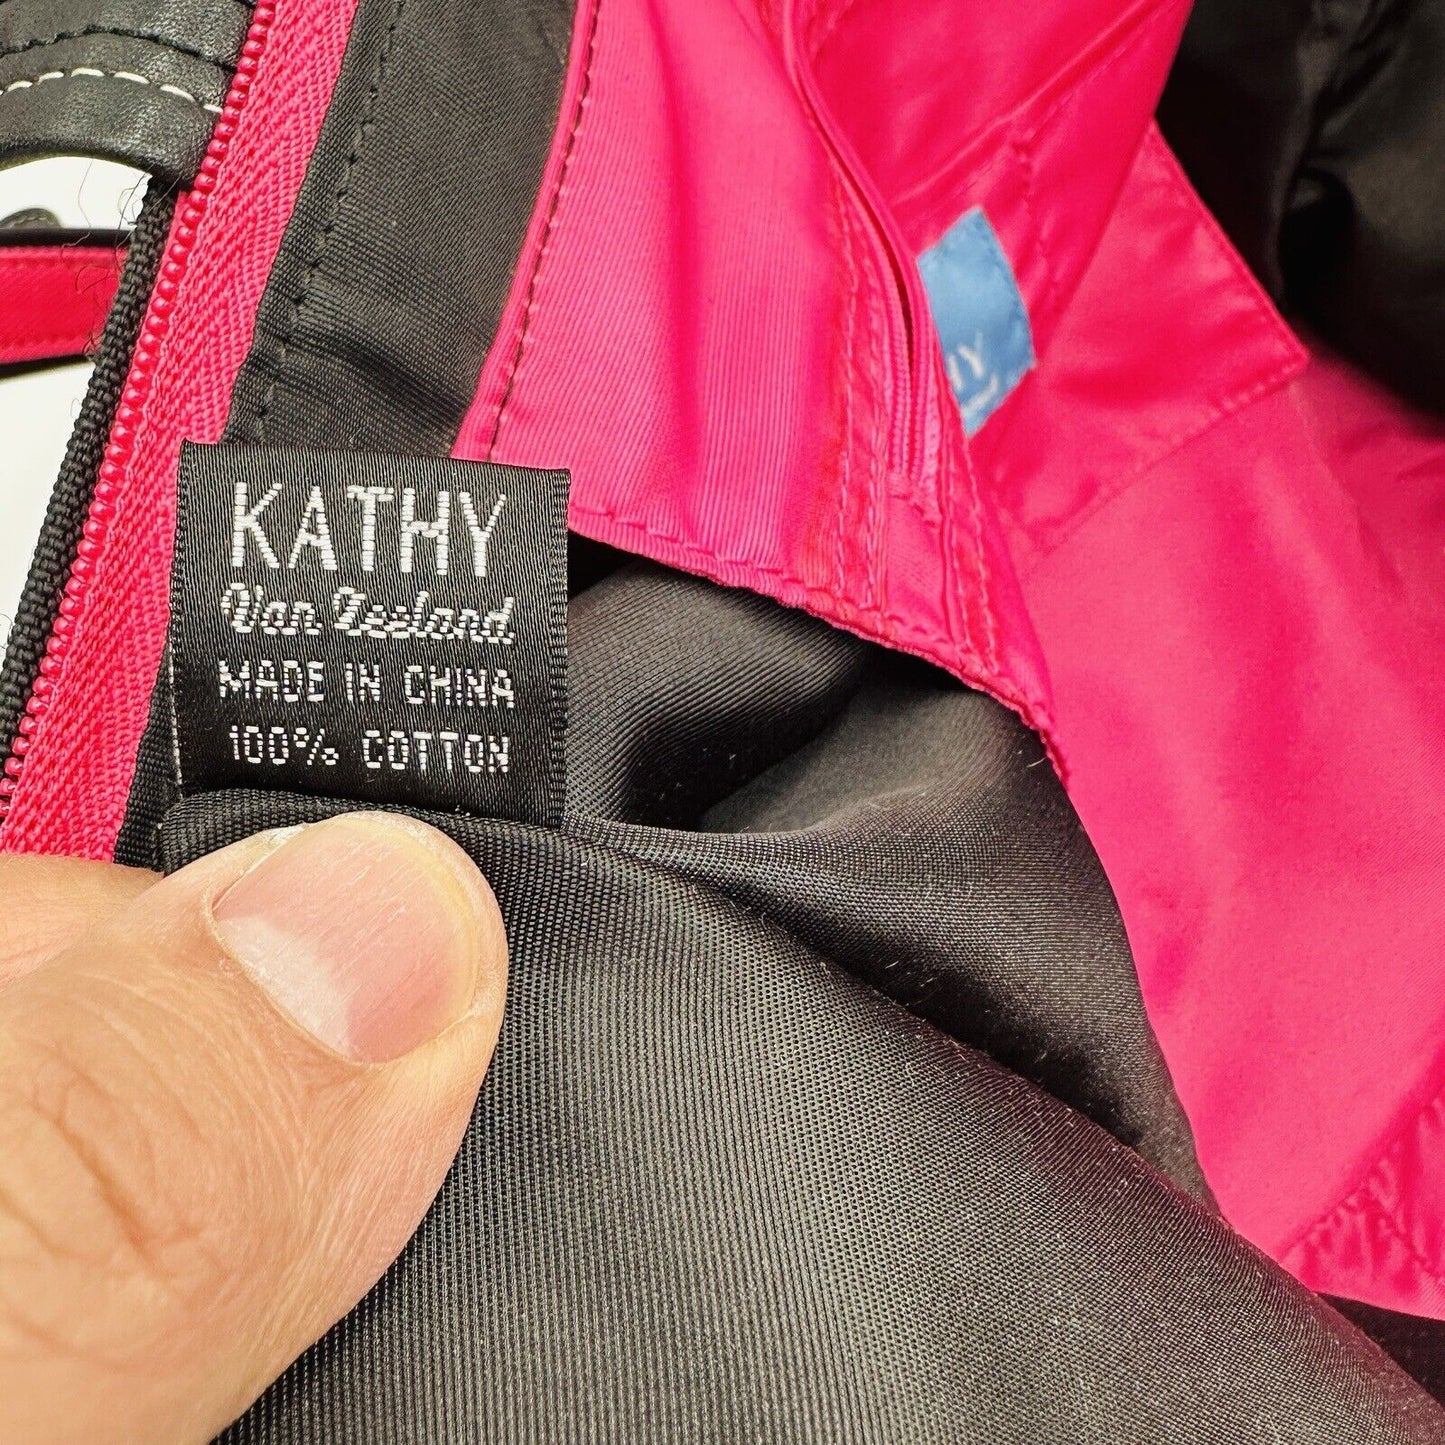 Kathy Van Zeeland Women's Tote Bag Purse Pink Large plus Accessories Handbag